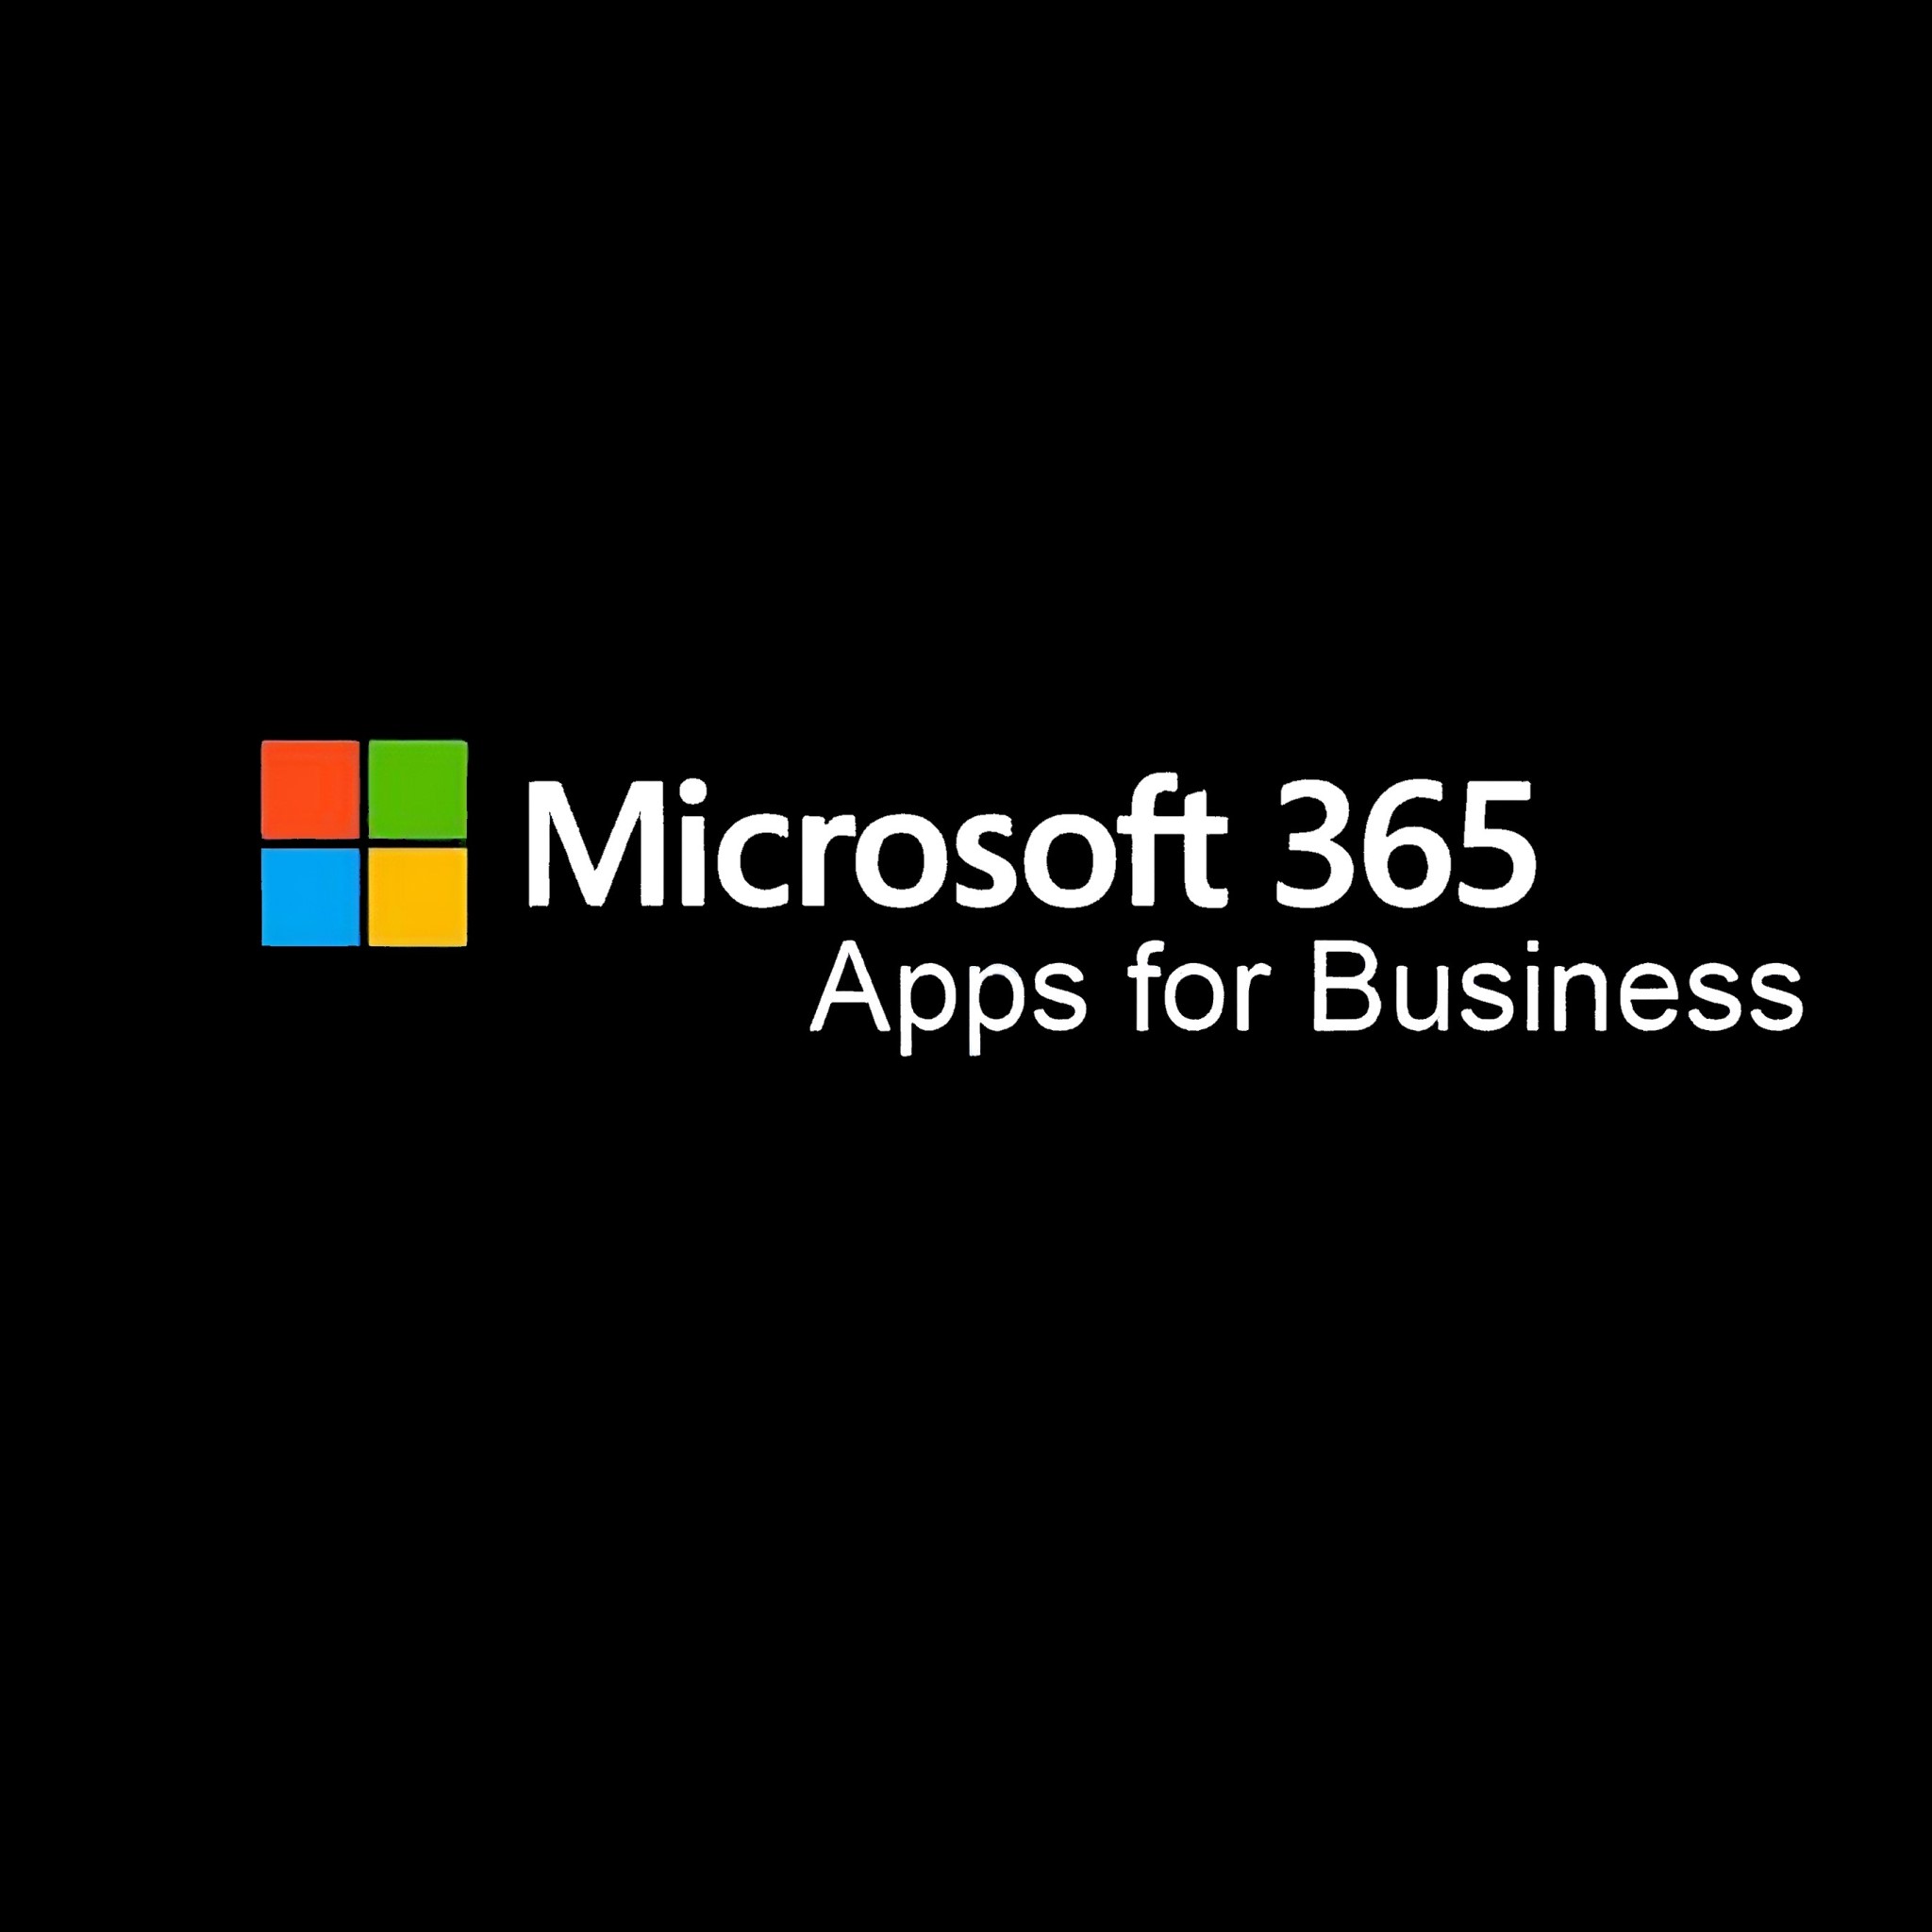 Microsoft 365 App for Business